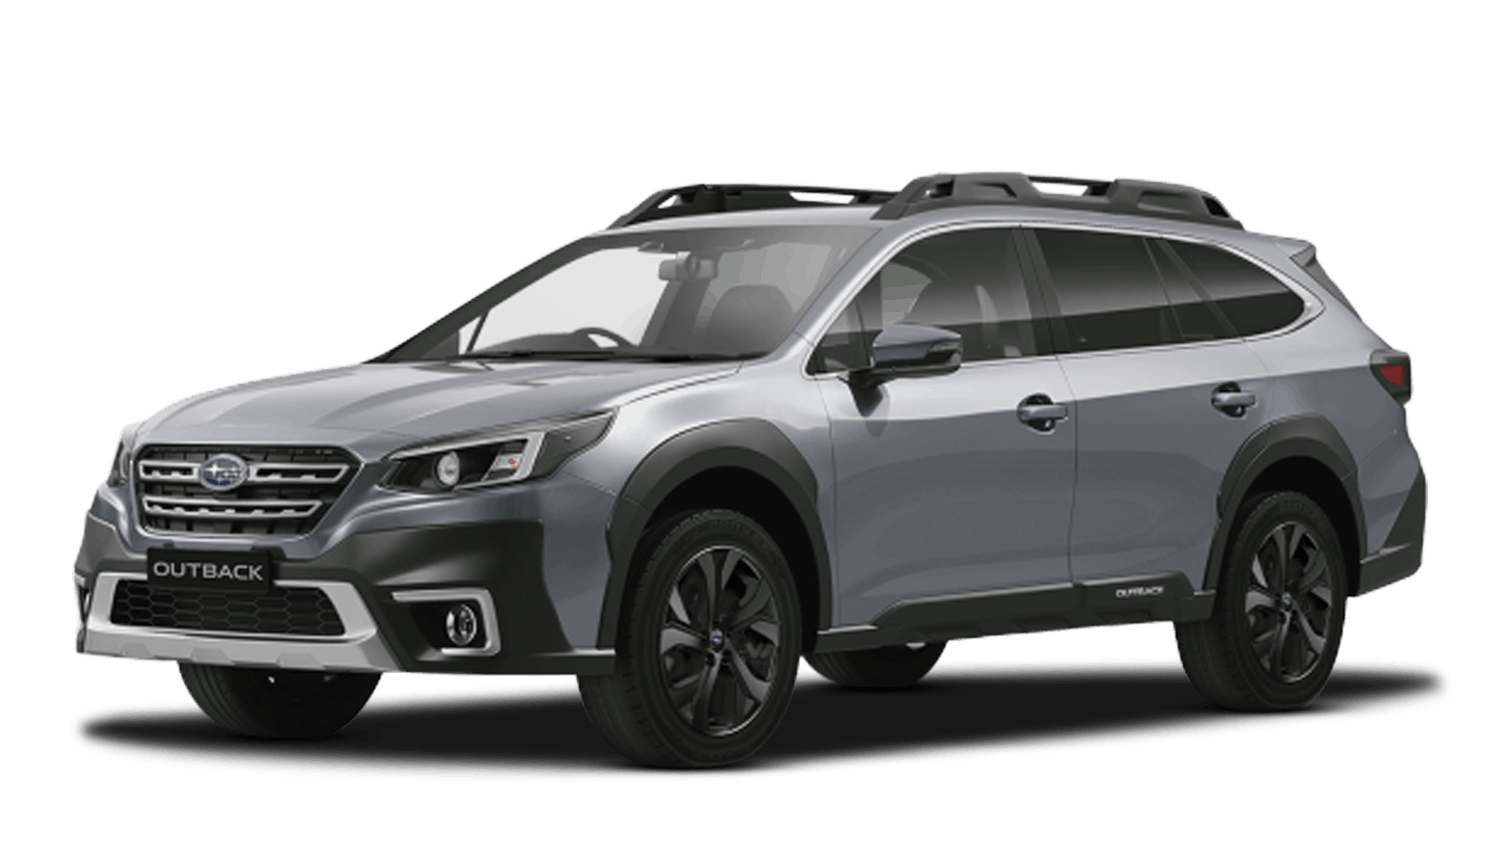 Ice Silver (Metallic) All-New Subaru Outback